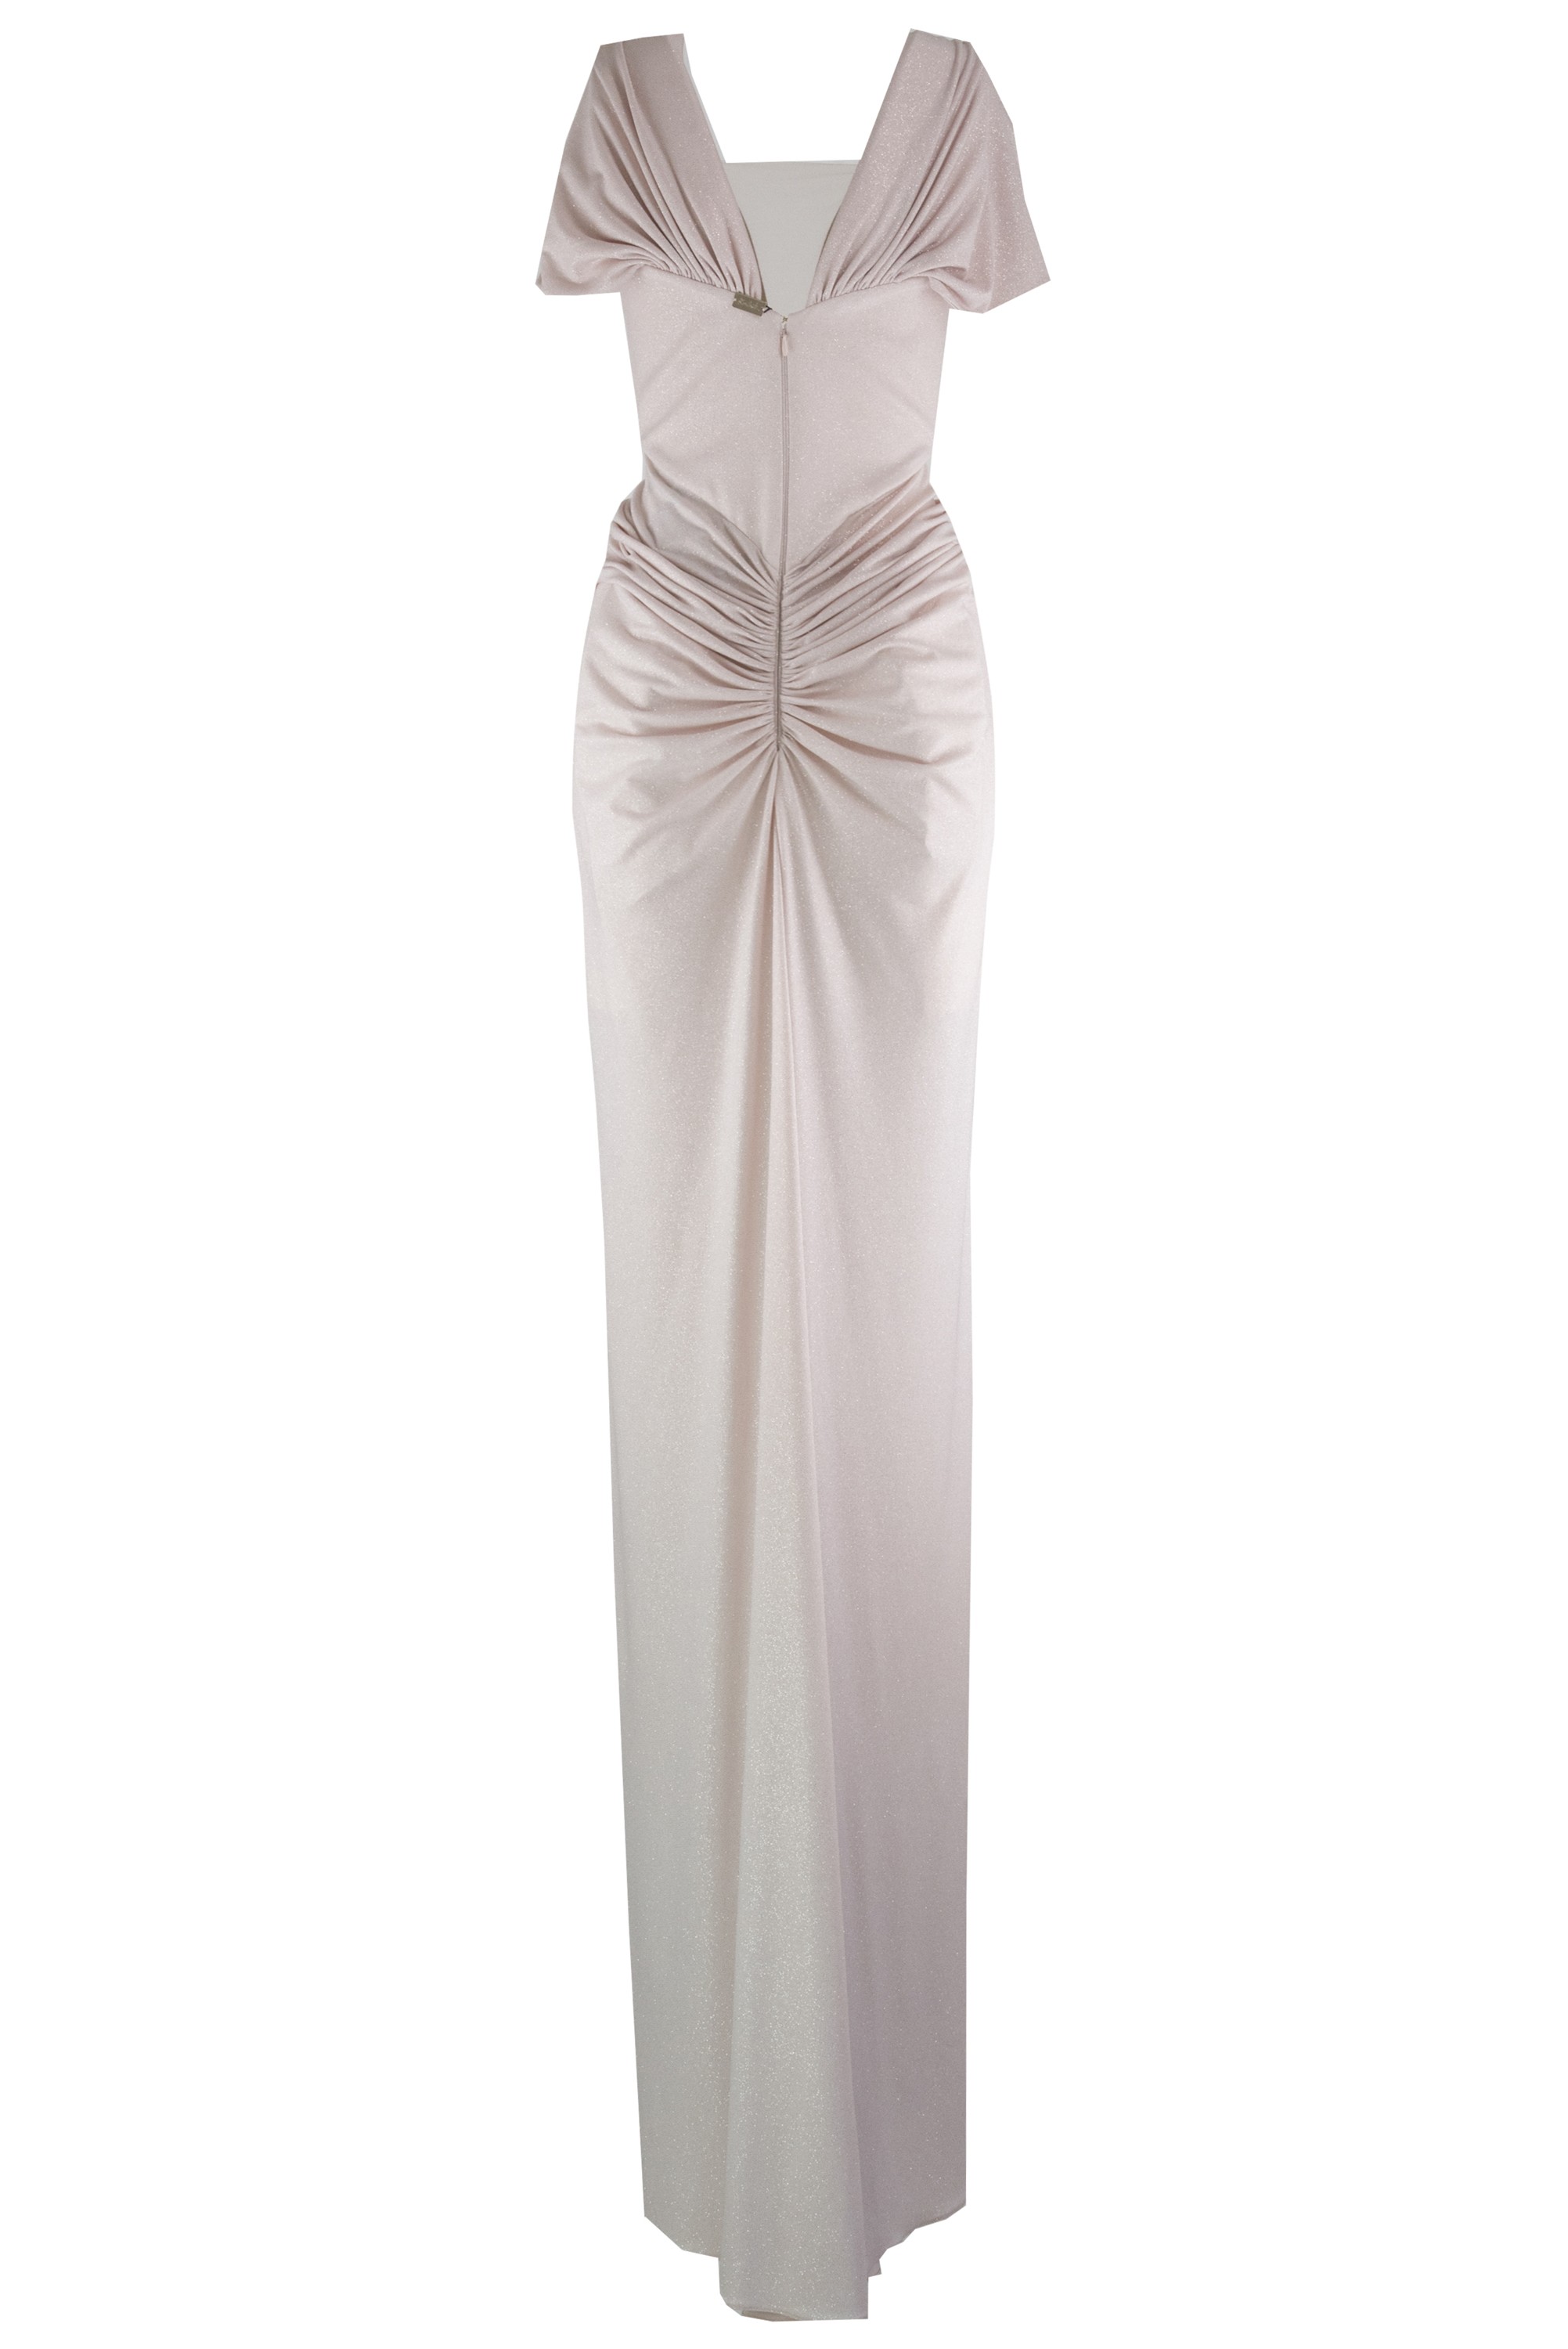 Rhea Costa Dress 20108D LG - New Season Spring summer 2020